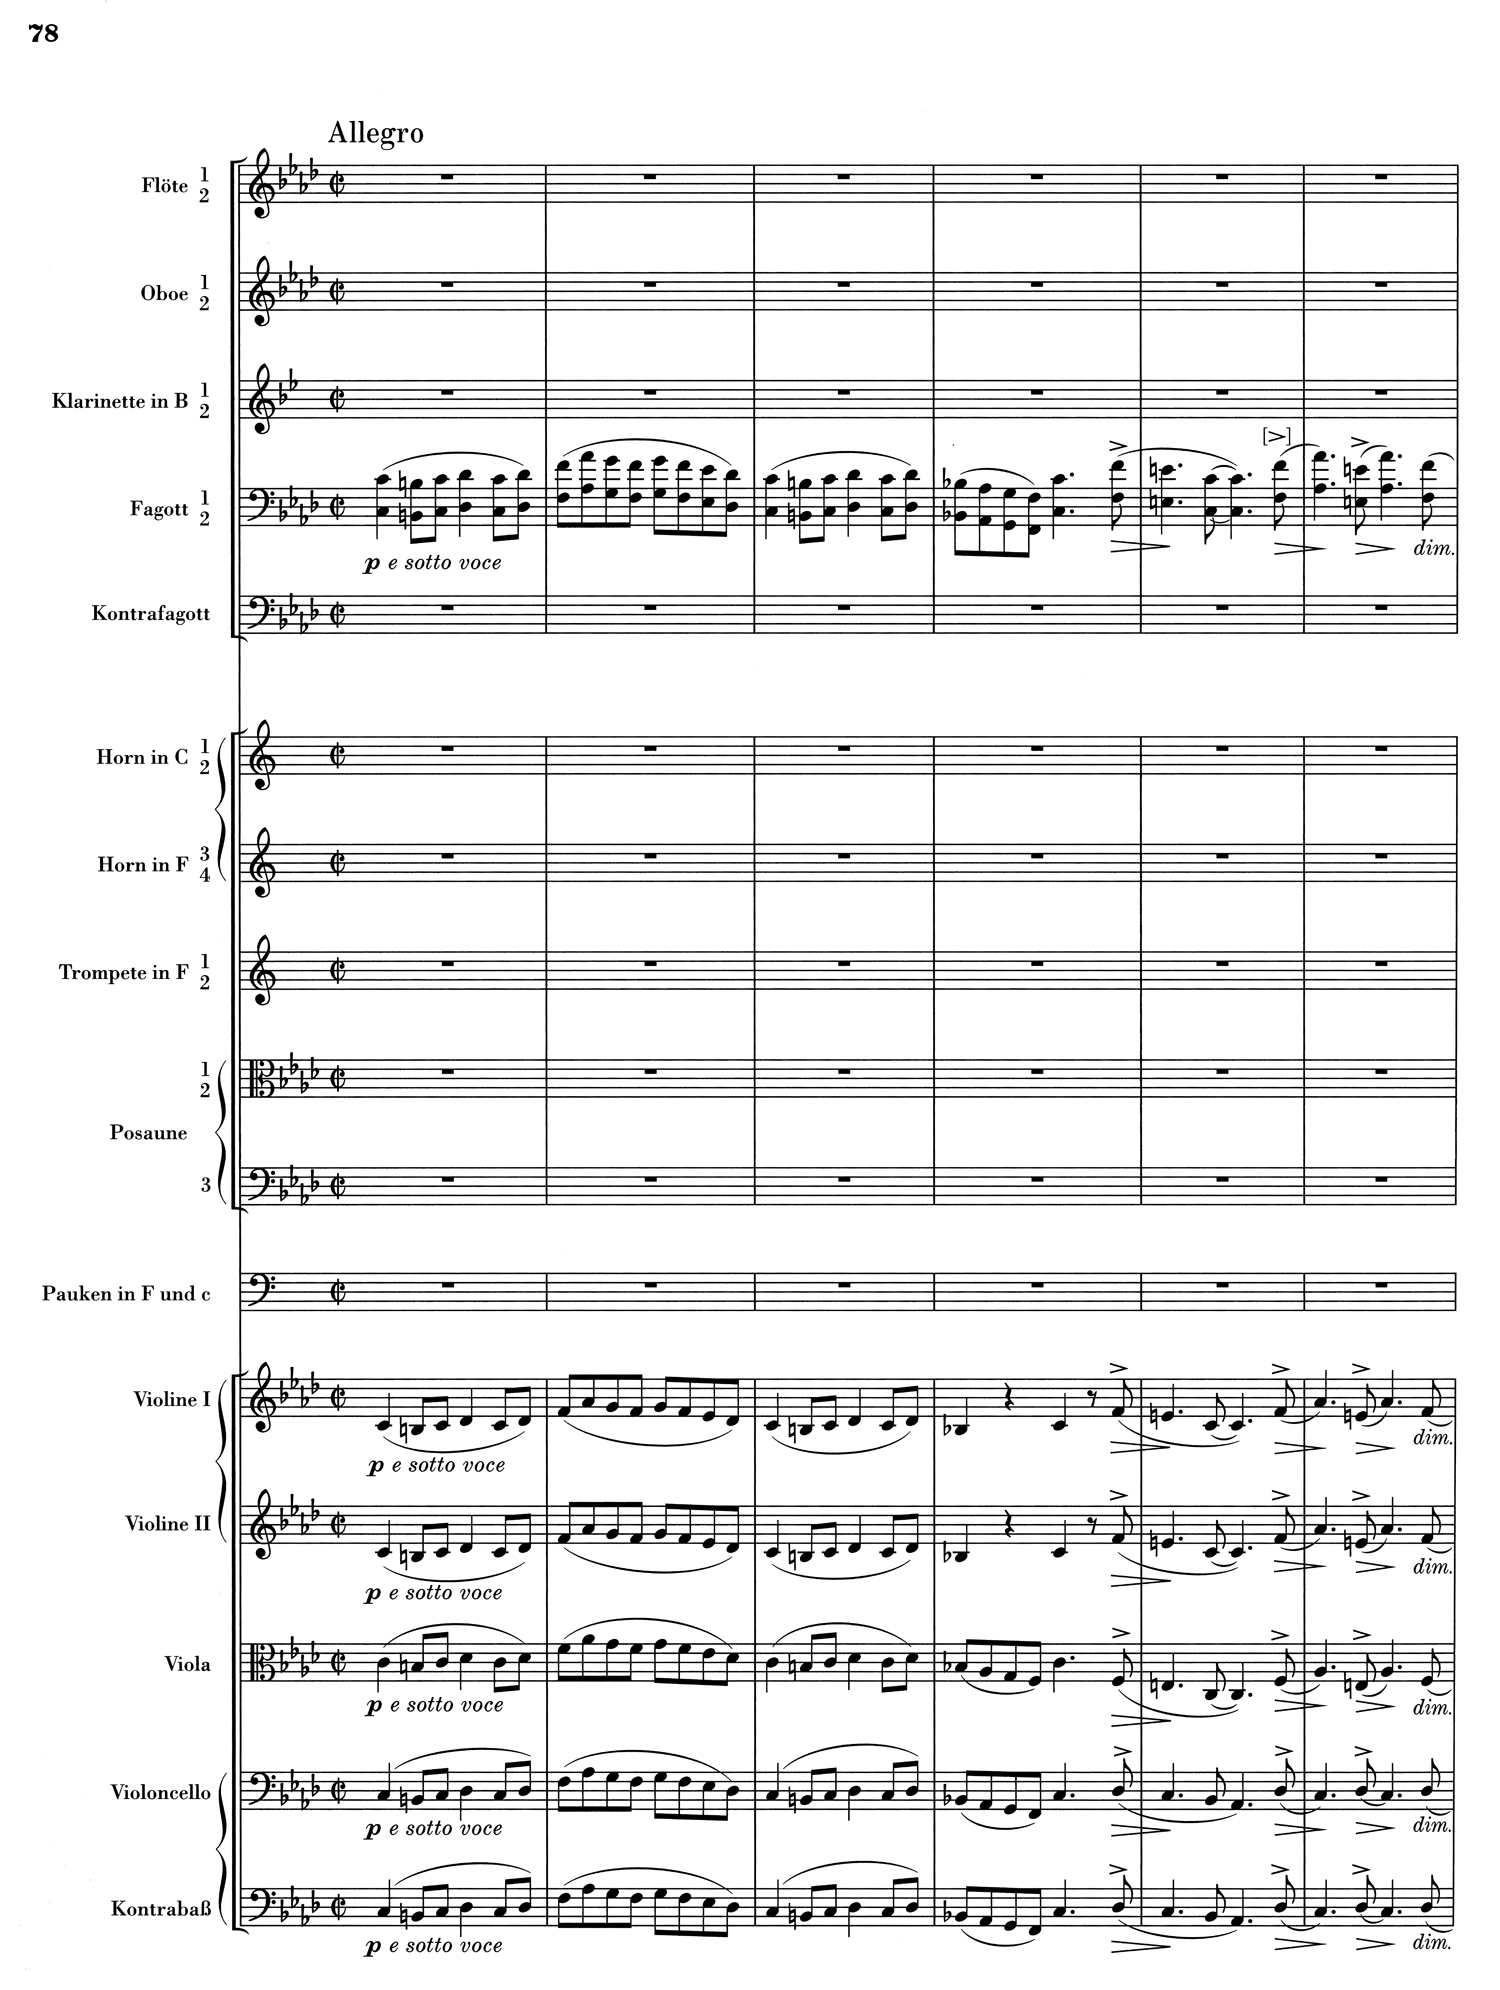 Brahms 3 Score 7.jpg